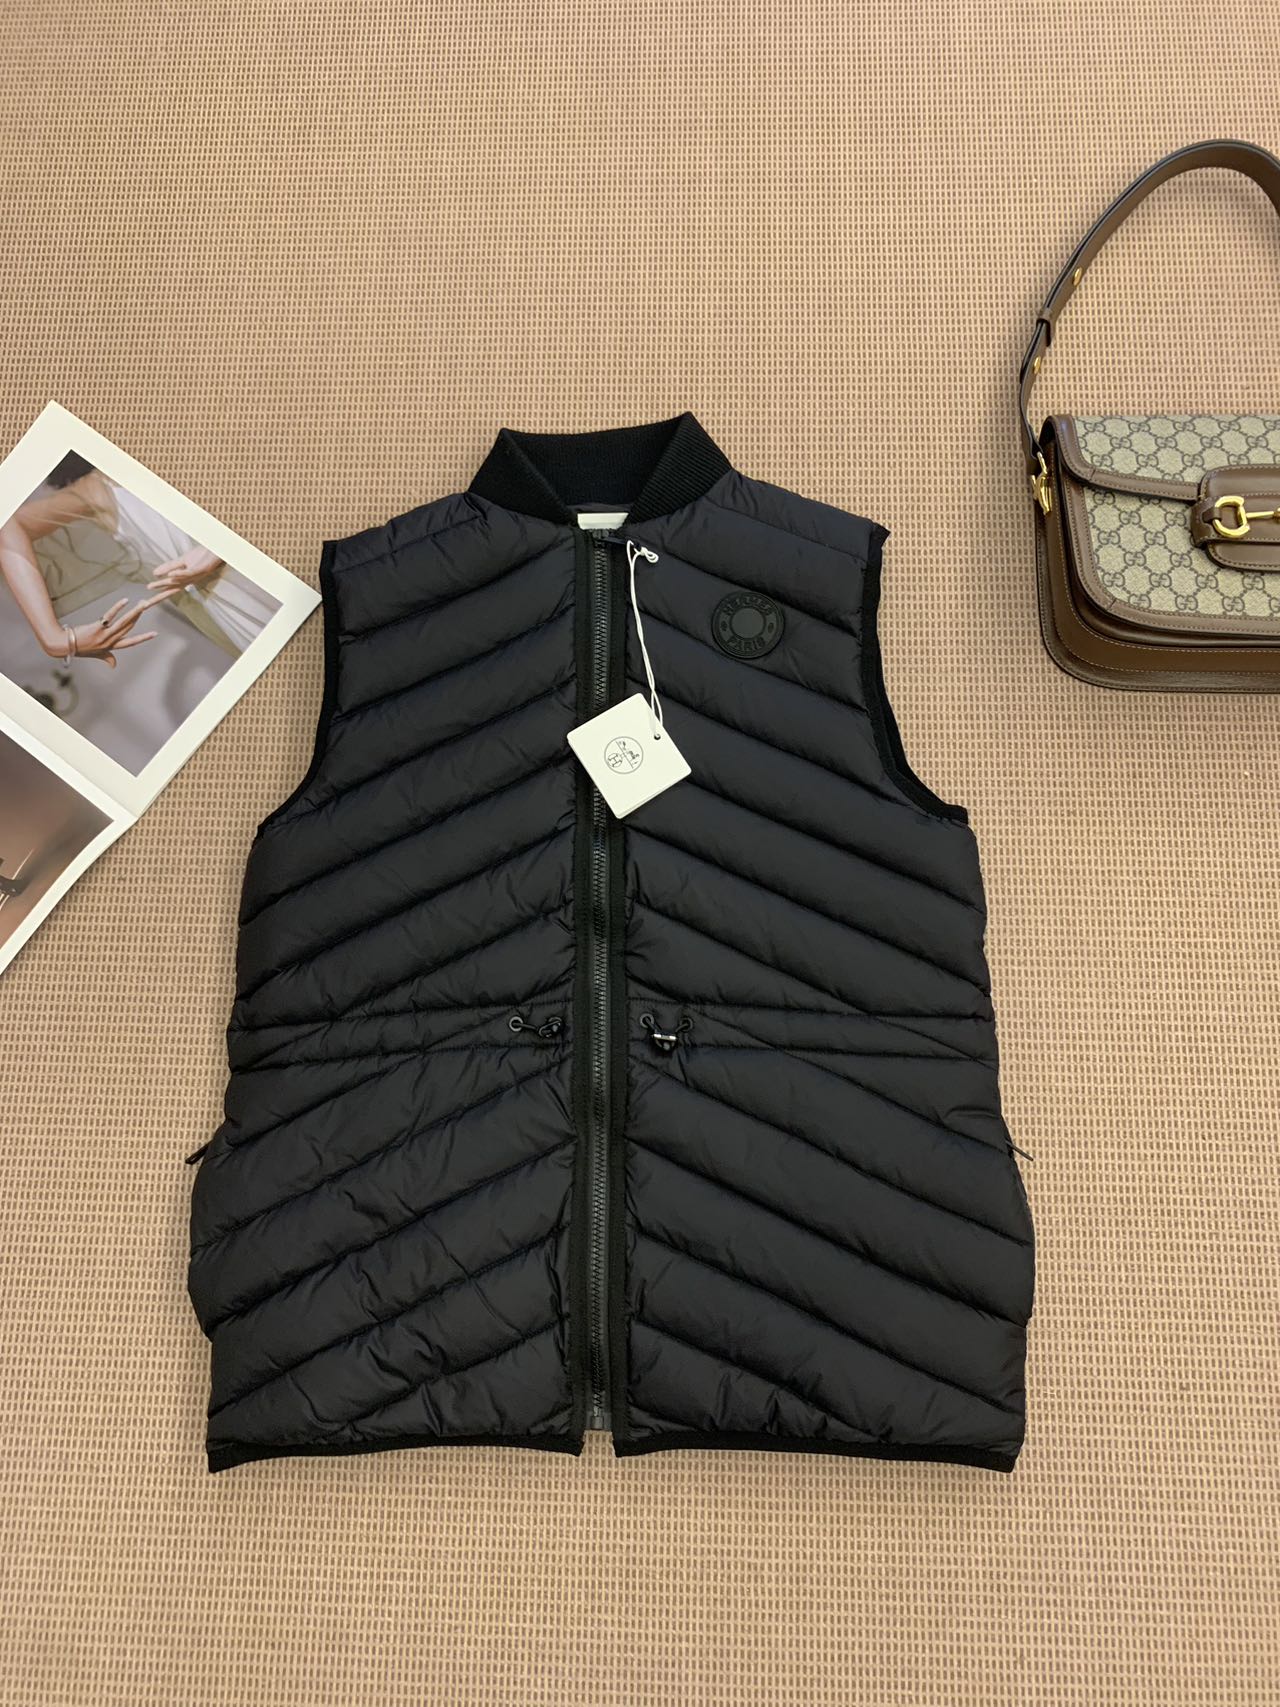 Hermes women puffer jacket vest - You Shiny